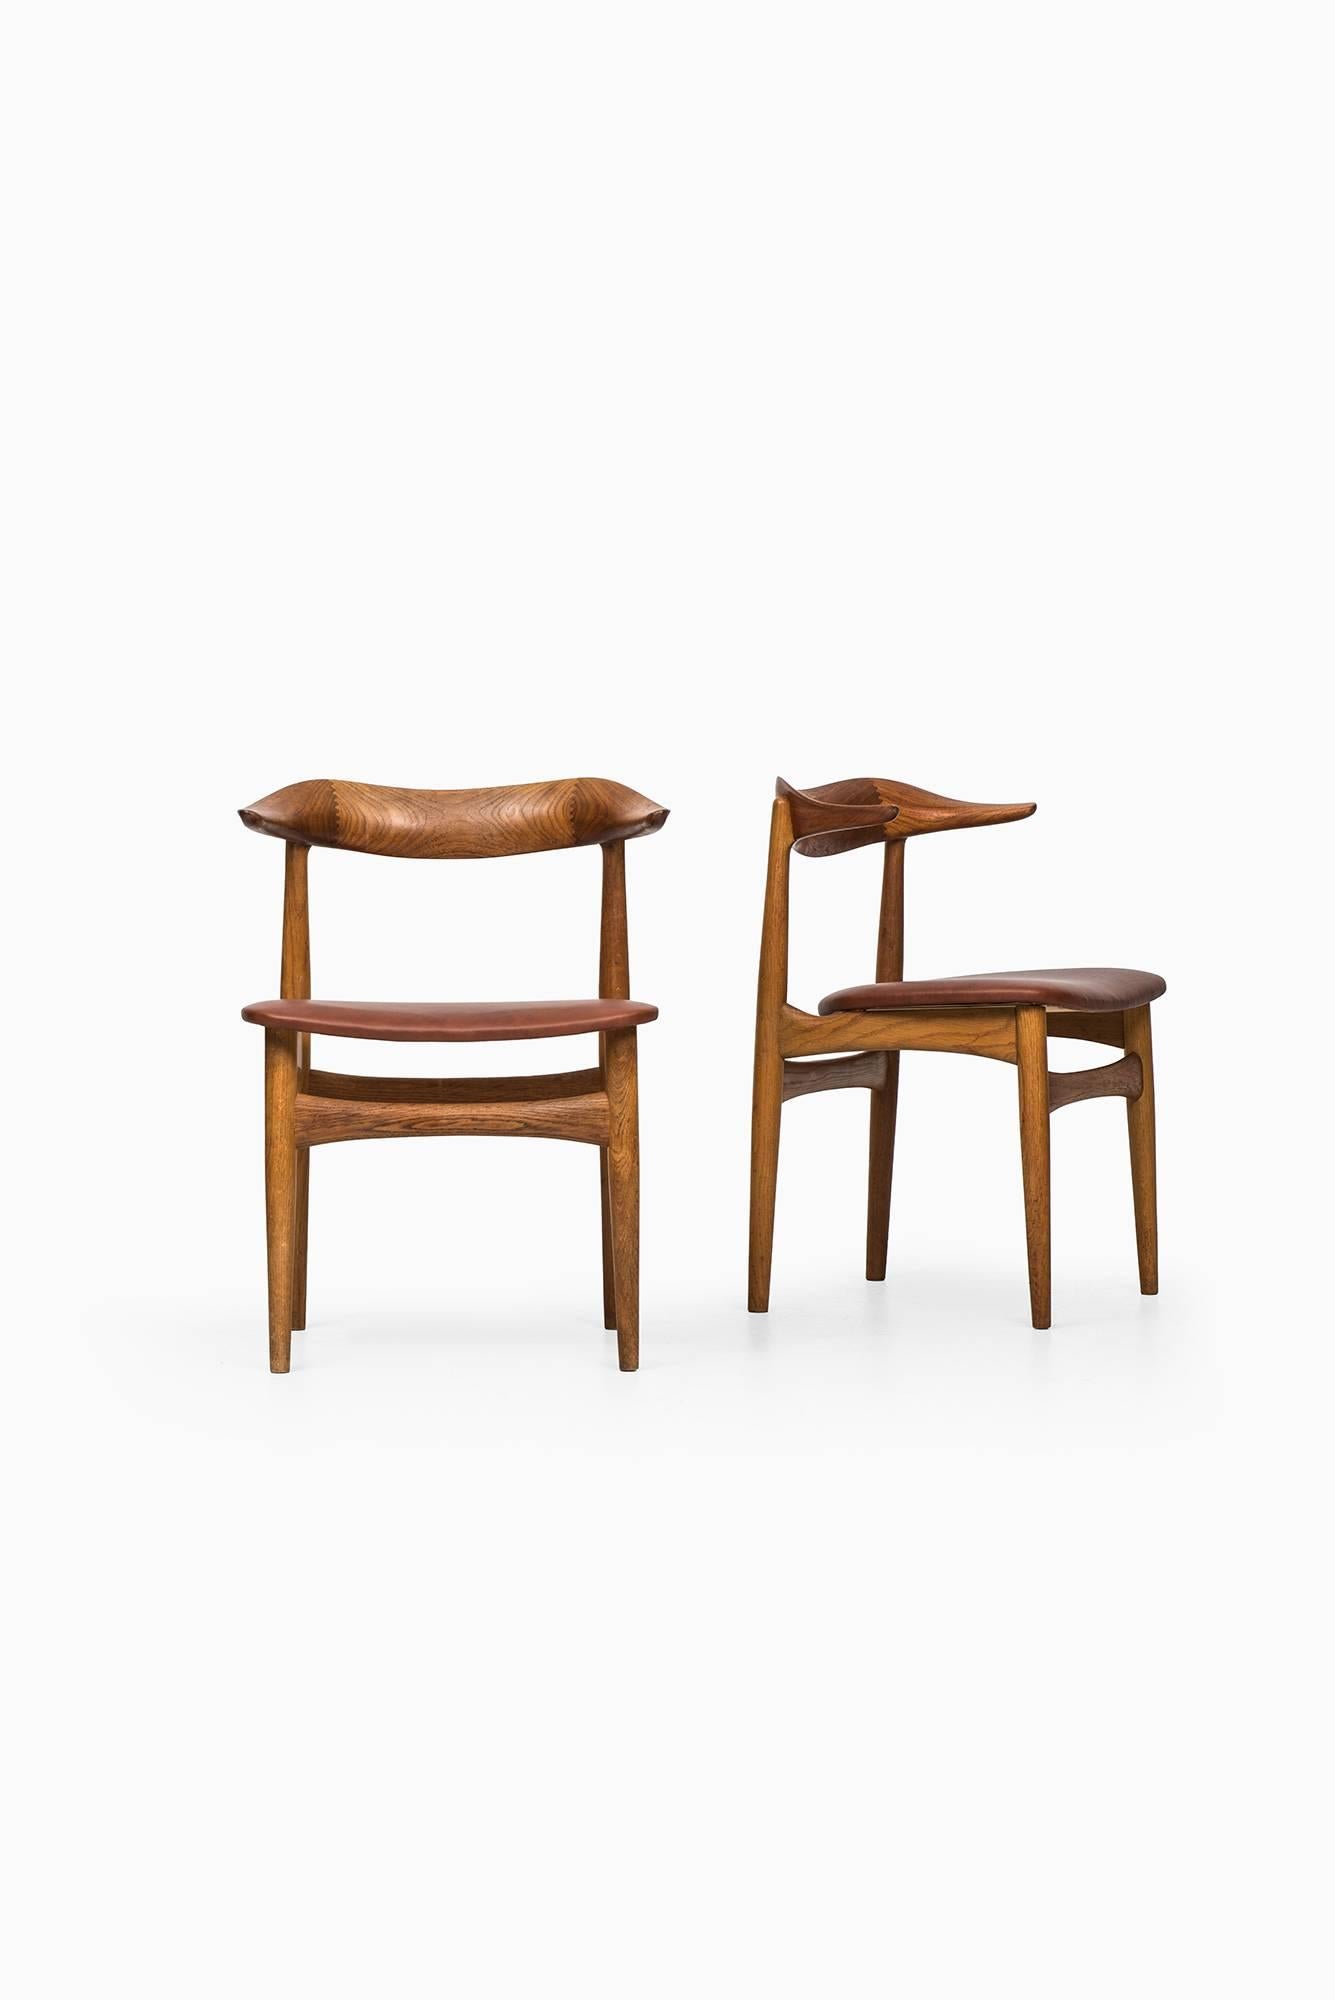 Scandinavian Modern Cowhorn Chairs Designed by Knud Faerch Produced by Slagelse Møbelfabrik